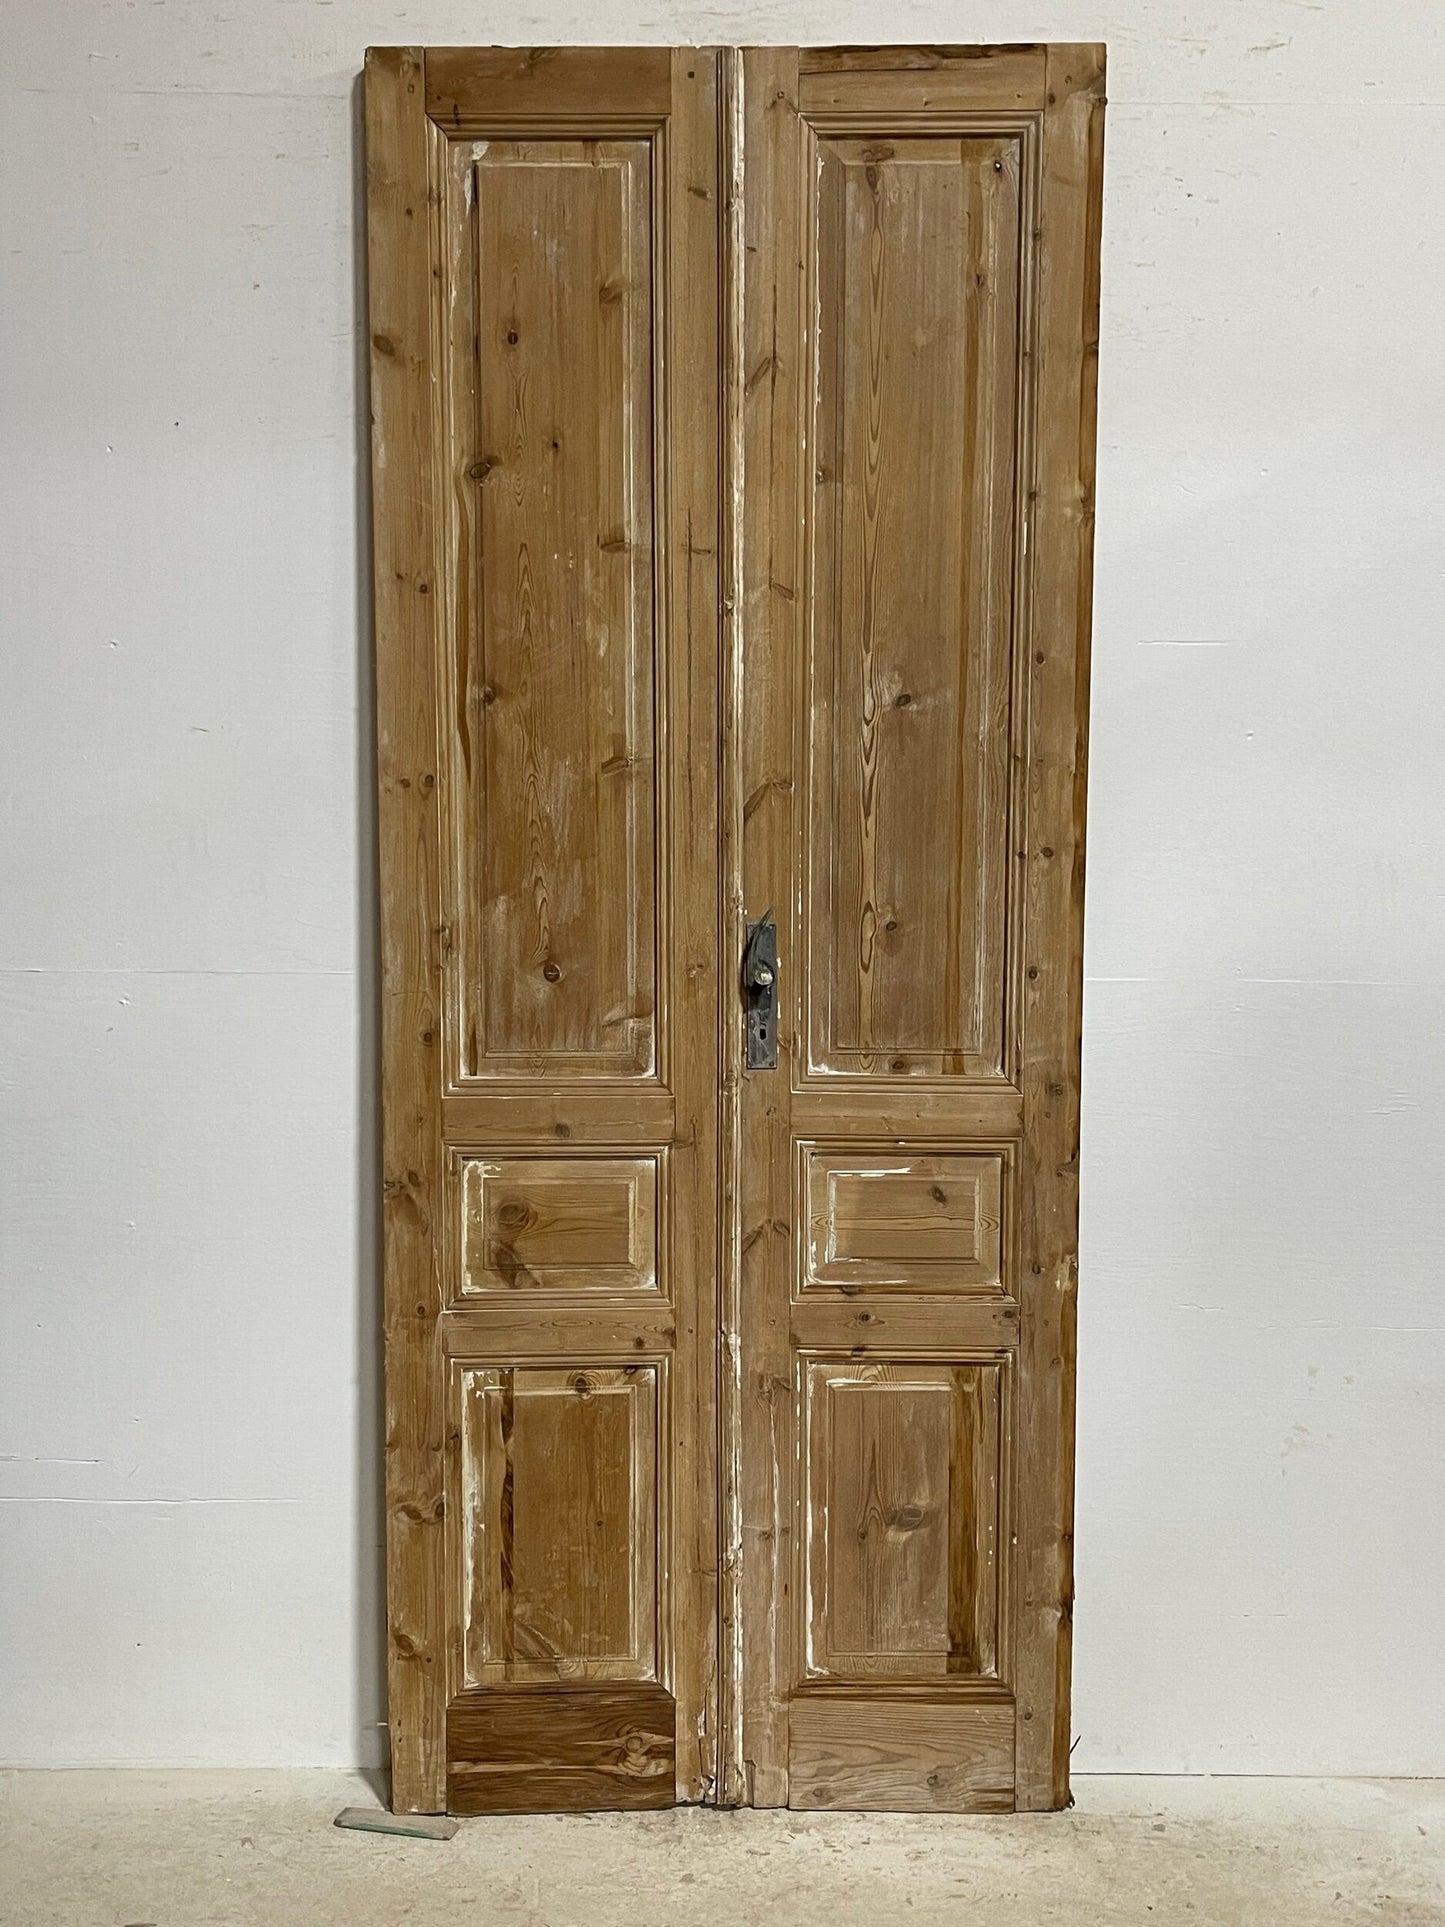 Antique French doors (98x39.25) H0133s